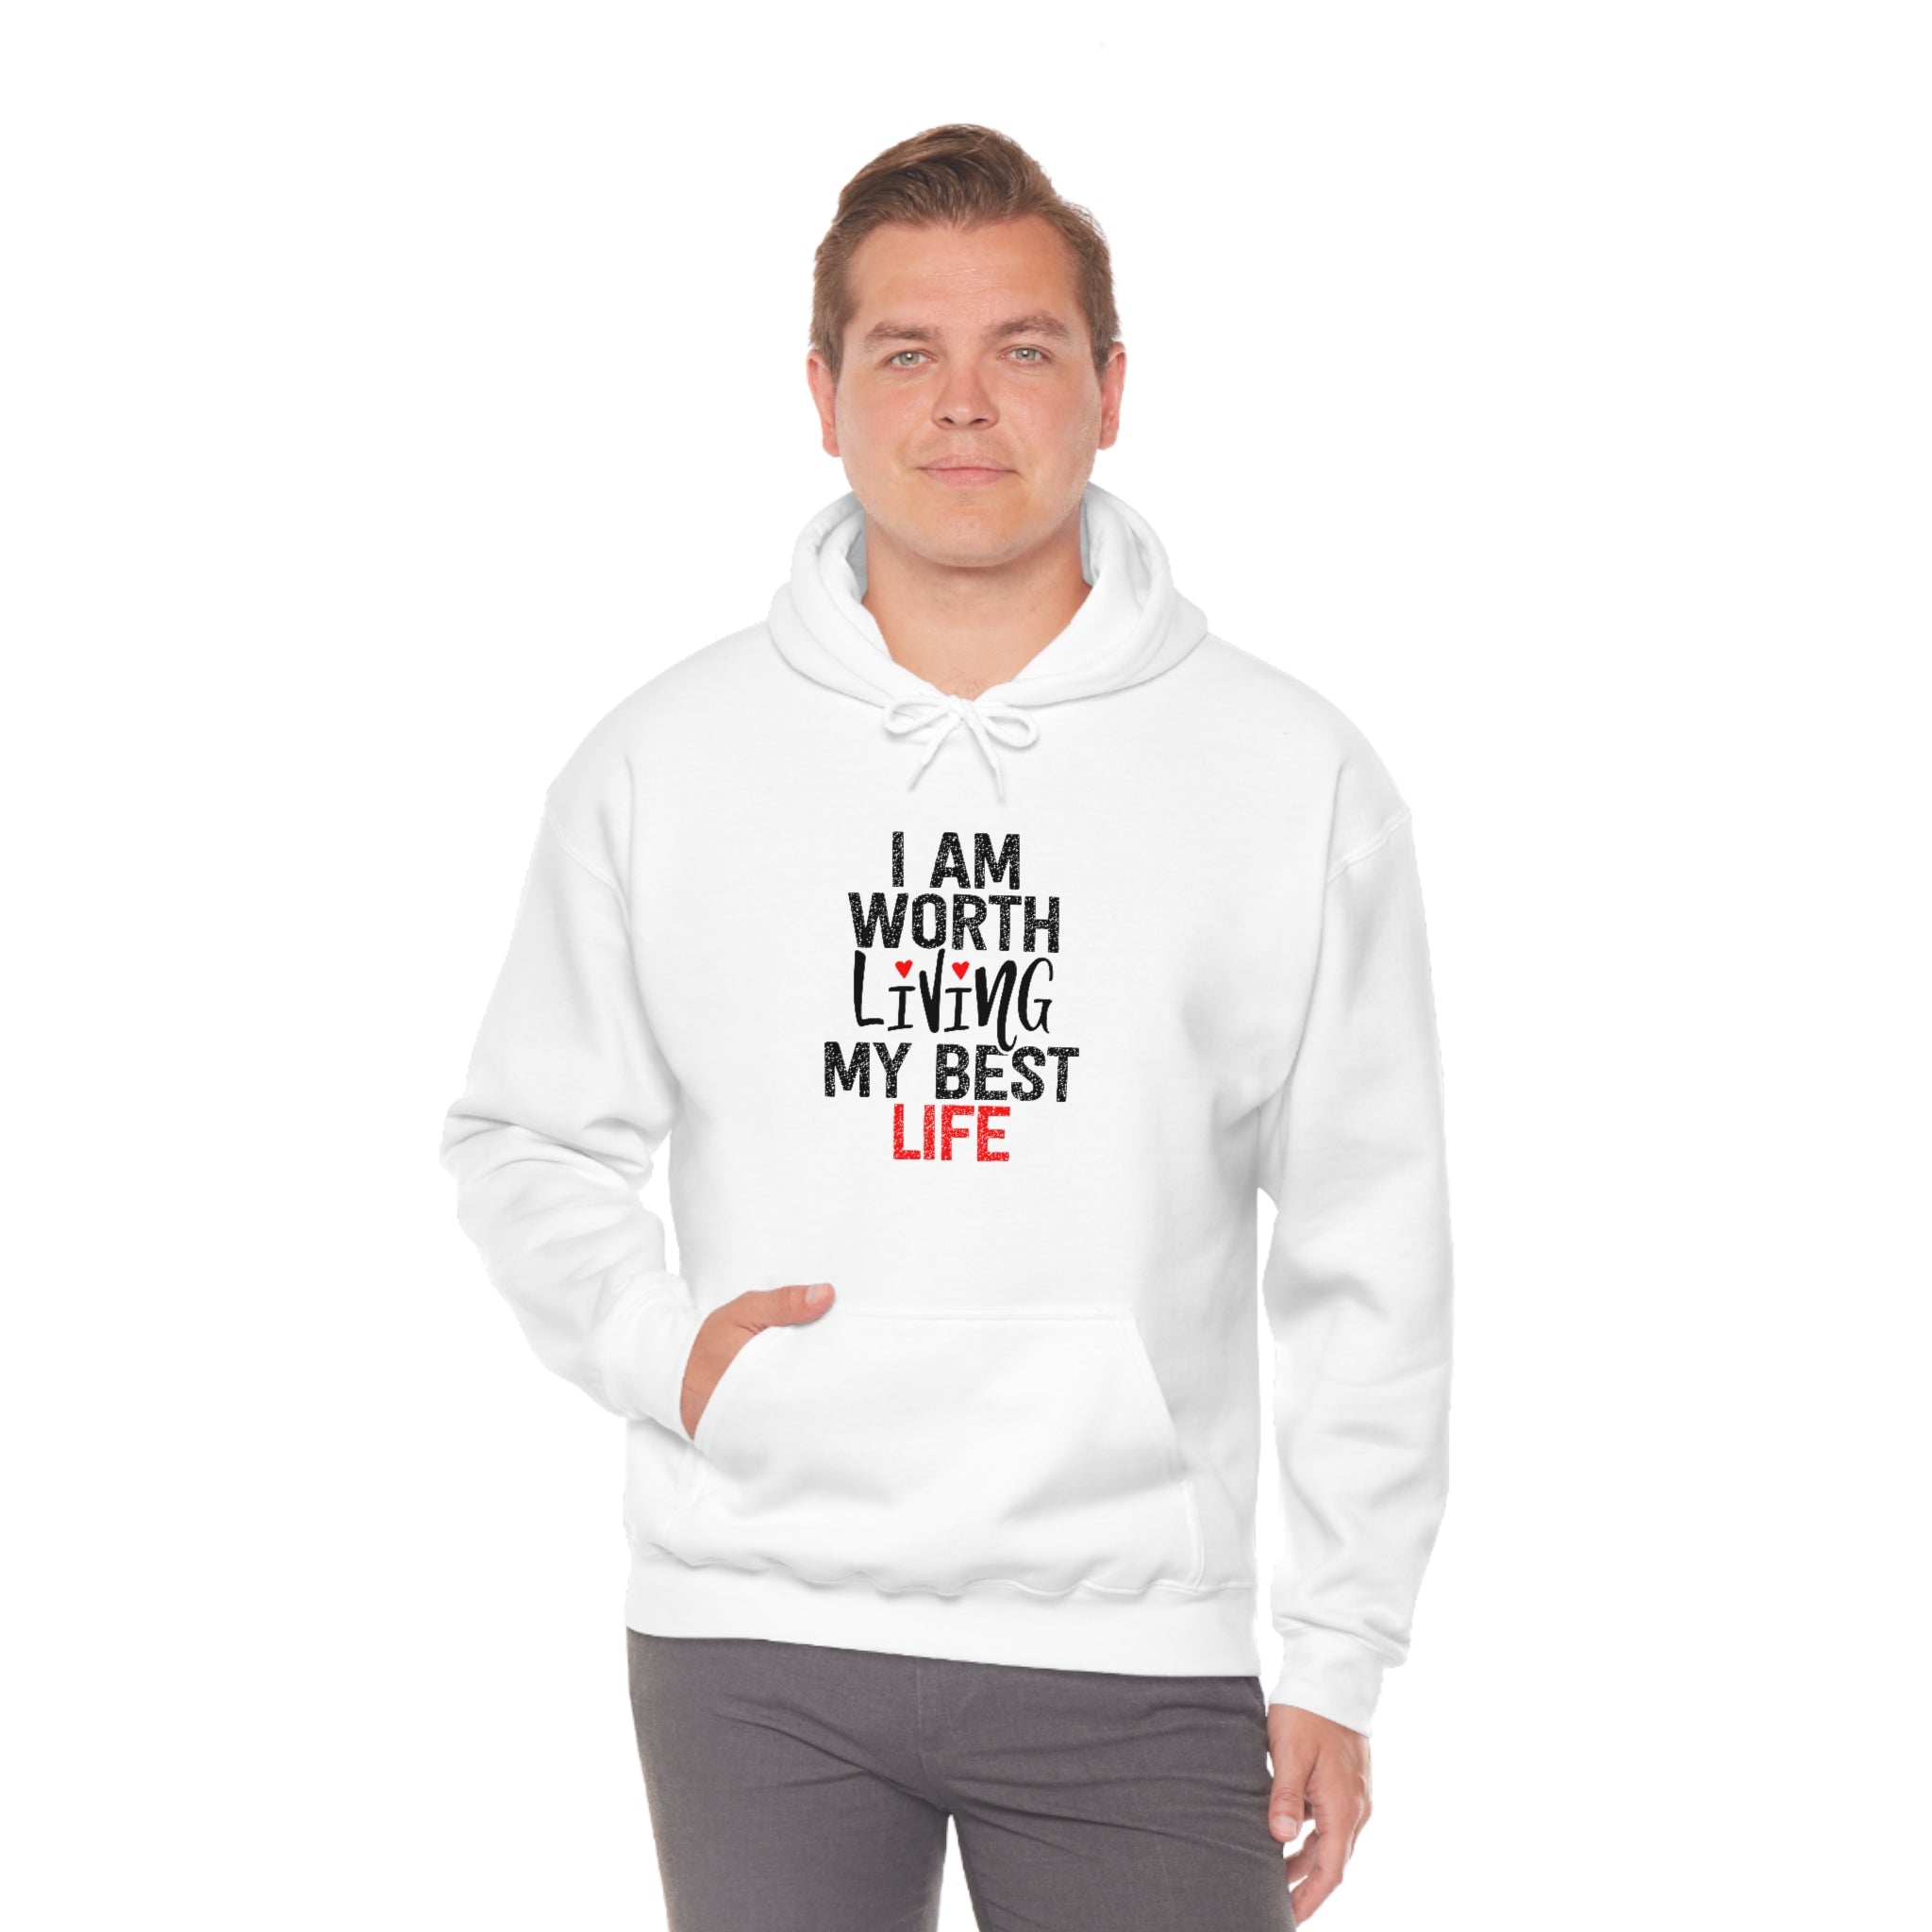 Living My Best Life Hooded Sweatshirt